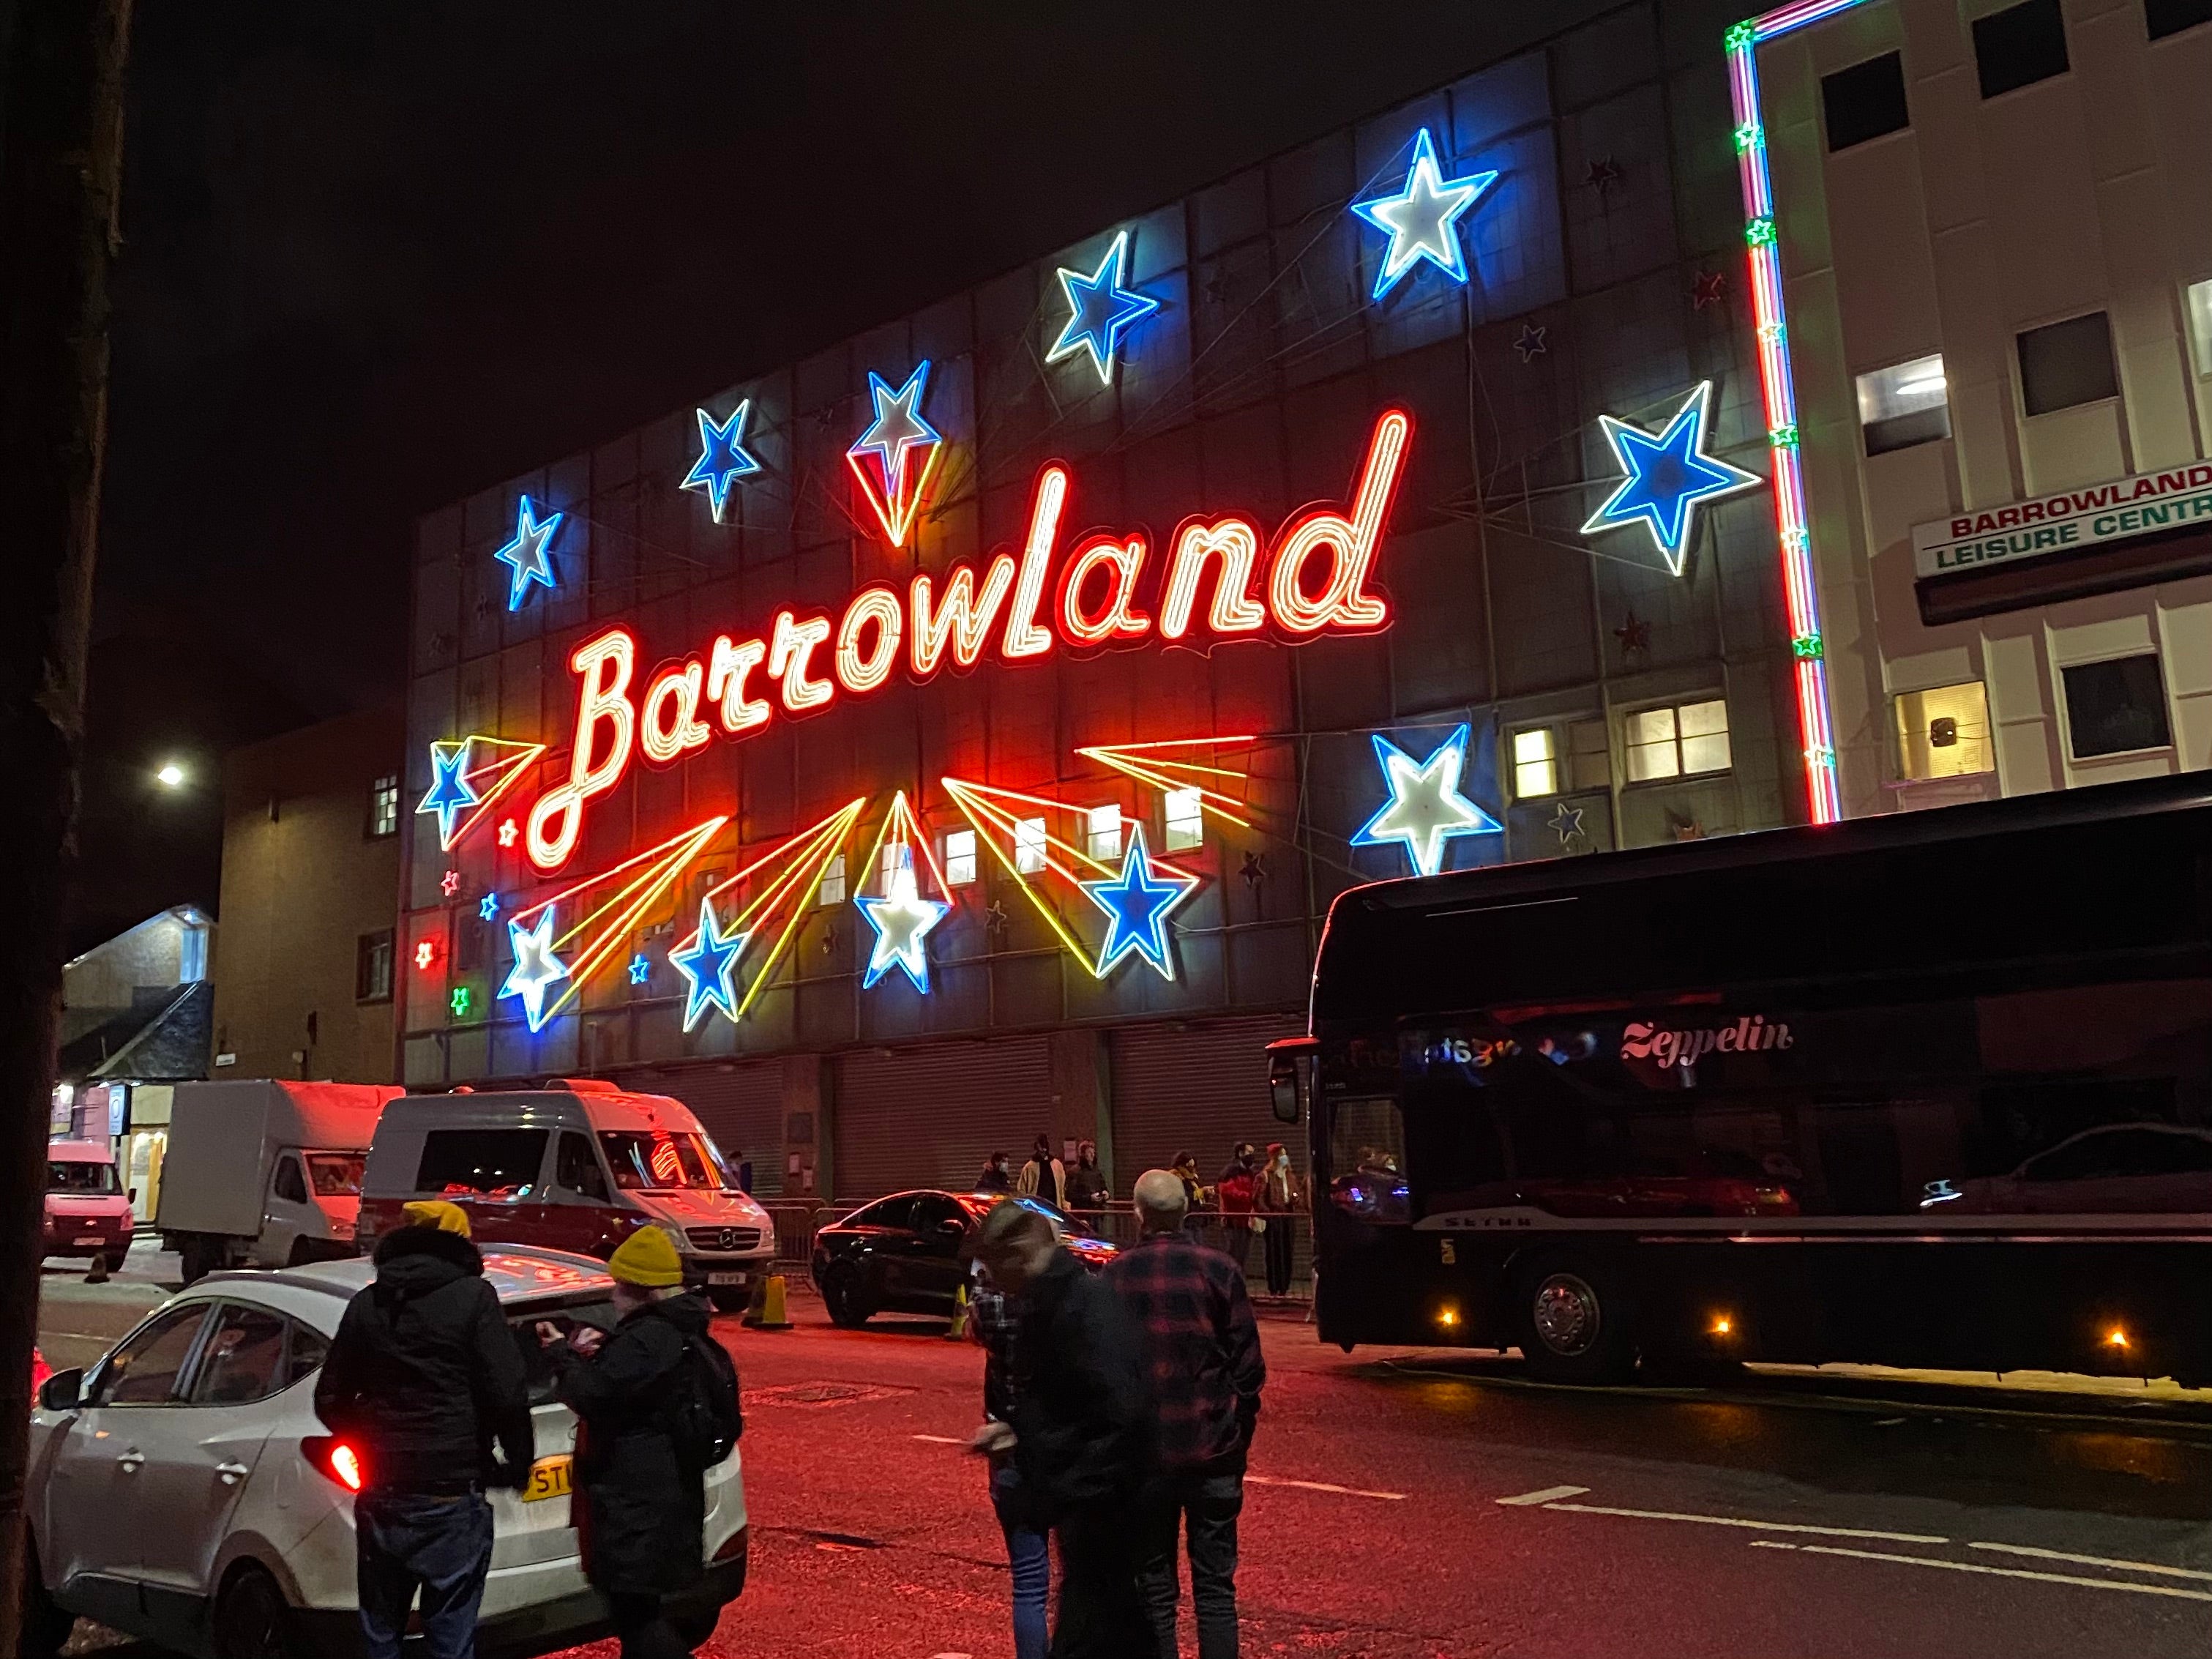 Glasgow’s Barrowland Ballroom